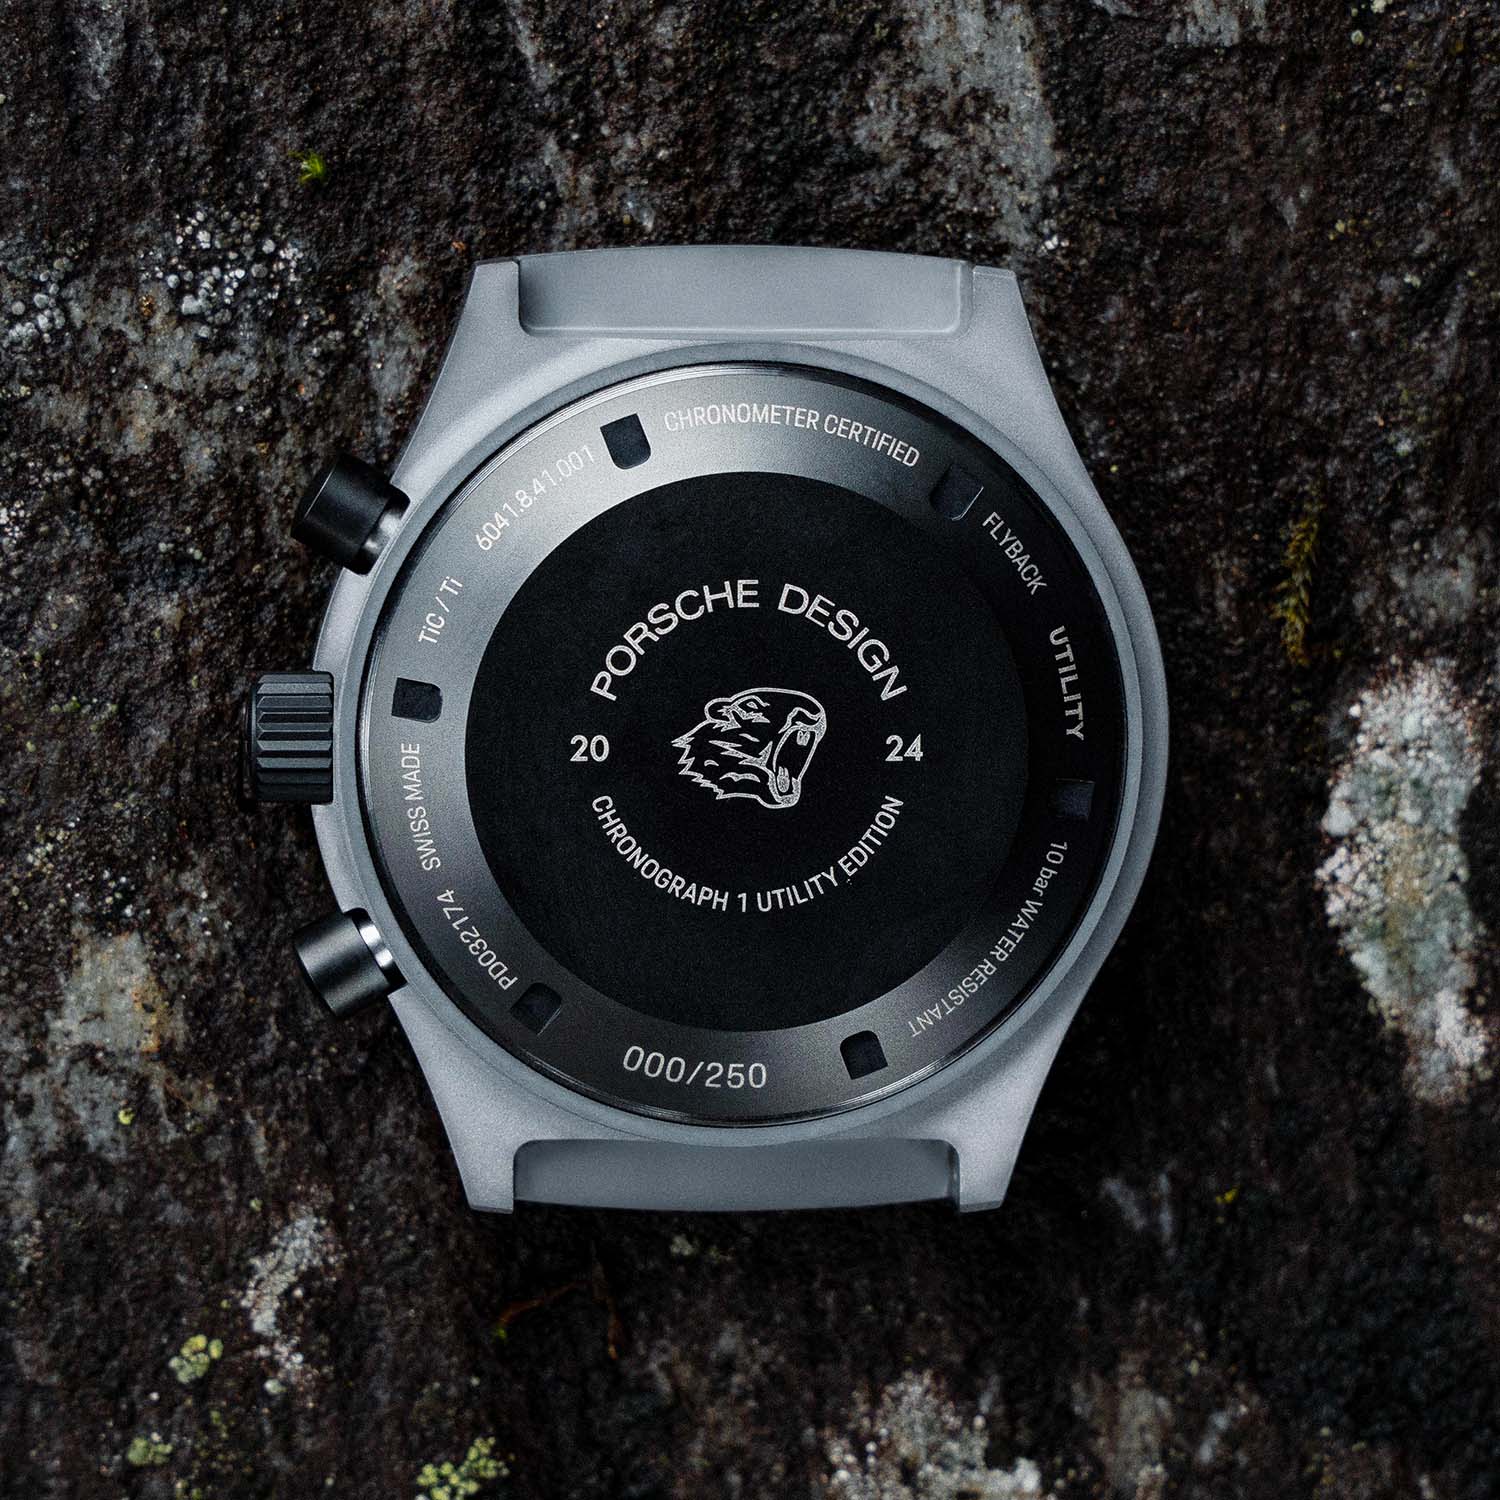 Porsche Design Chronograph 1 Utility Limited Edition Watch